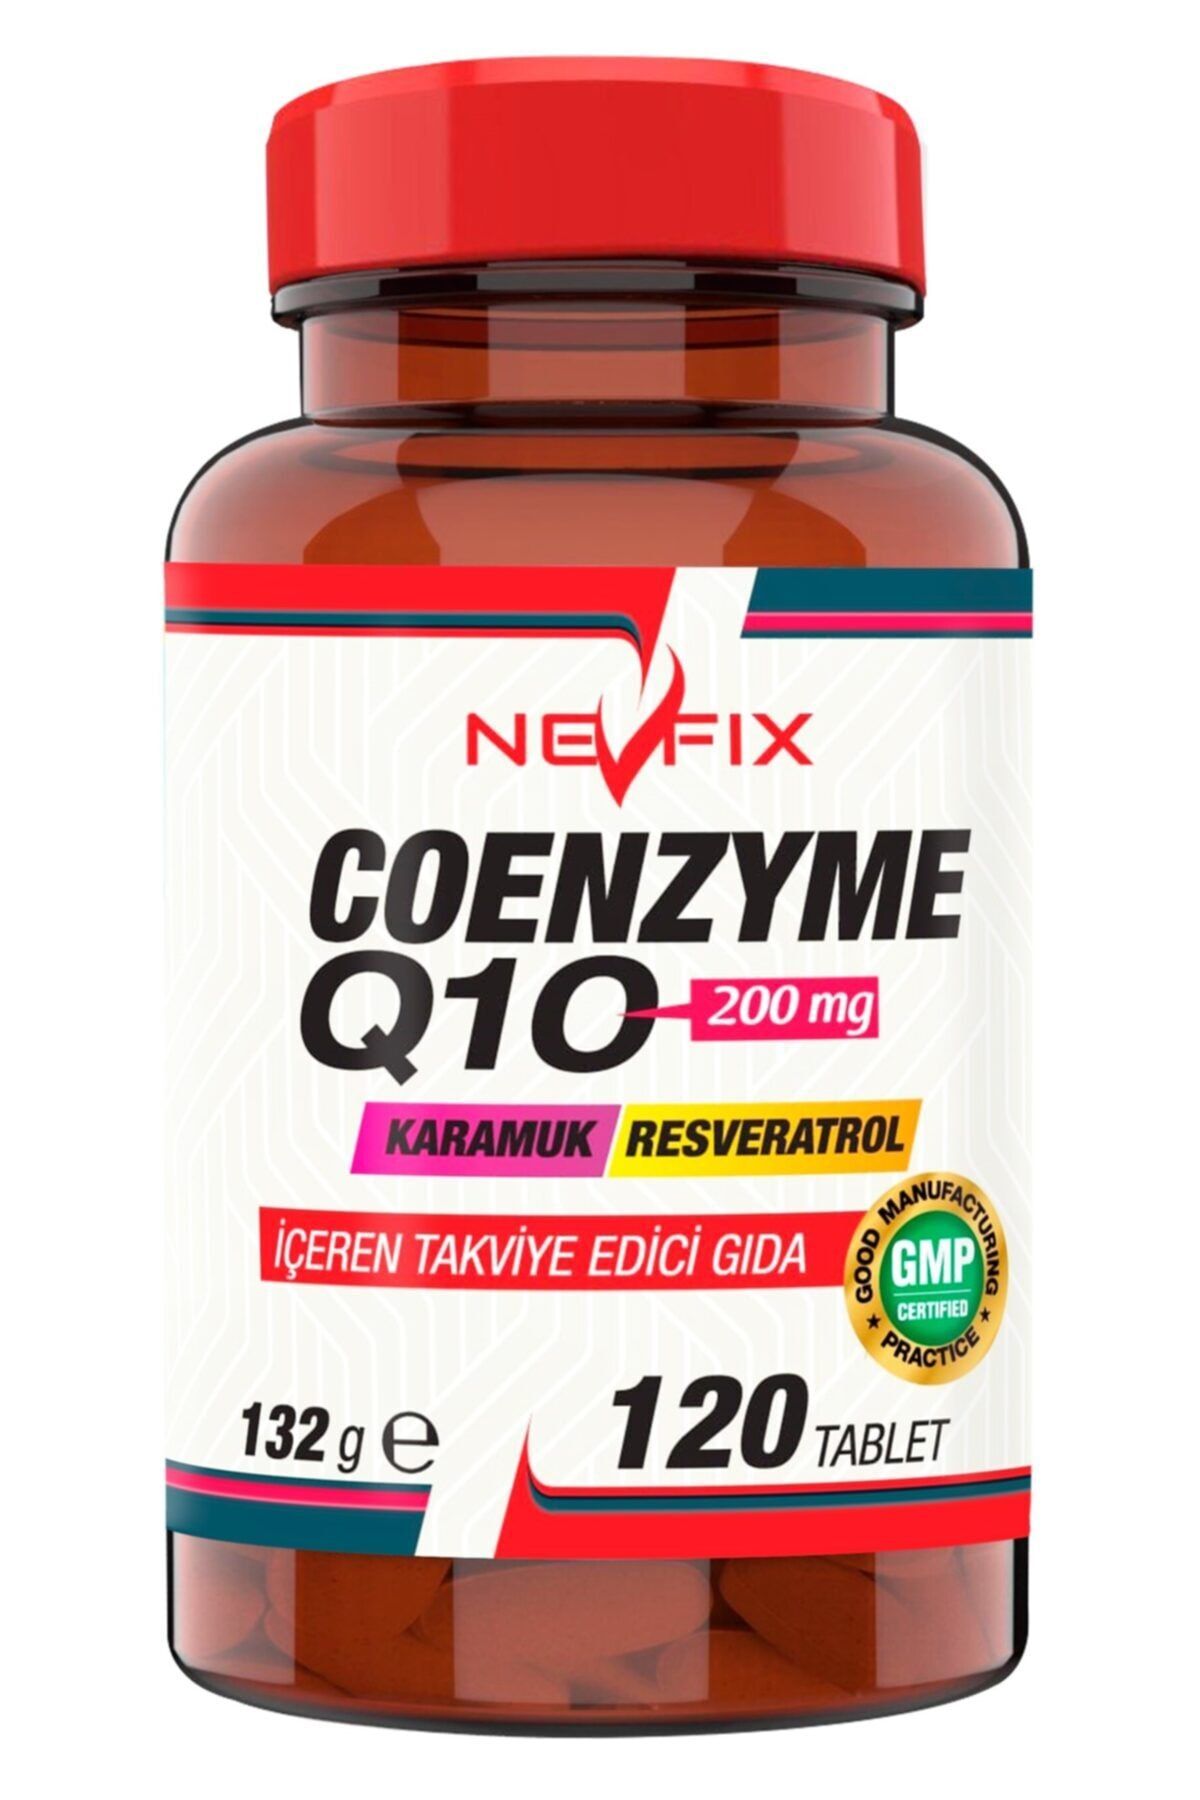 Nevfix 120 Tablet Coenzyme Q10 200 Mg Koenzim Karamuk Üzüm Çekirdeği Zerdeçal Resveratrol Vitamin C